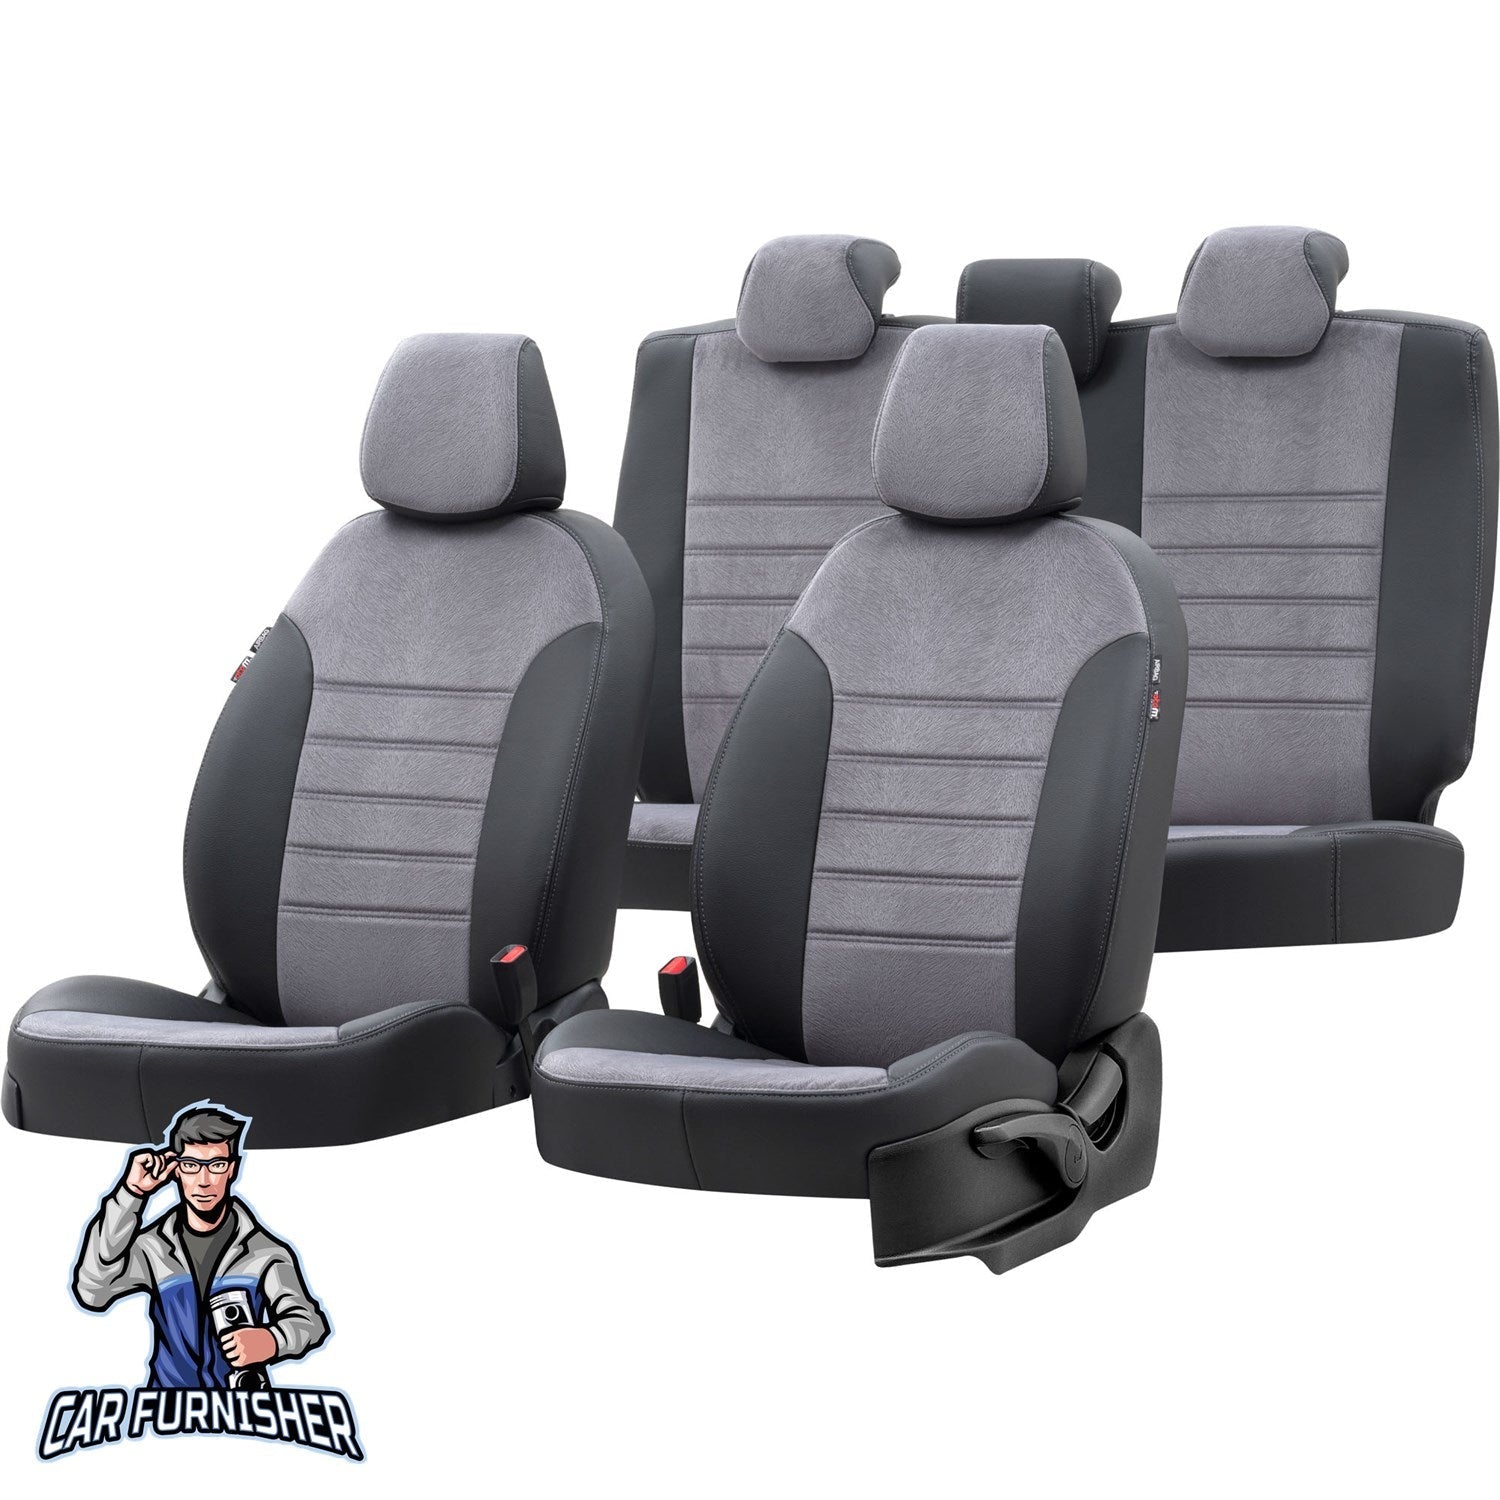 Chevrolet Captiva Car Seat Cover 2006-2011 LS/LT/LTX-Z London Smoked Black Full Set (5 Seats + Handrest) Leather & Fabric